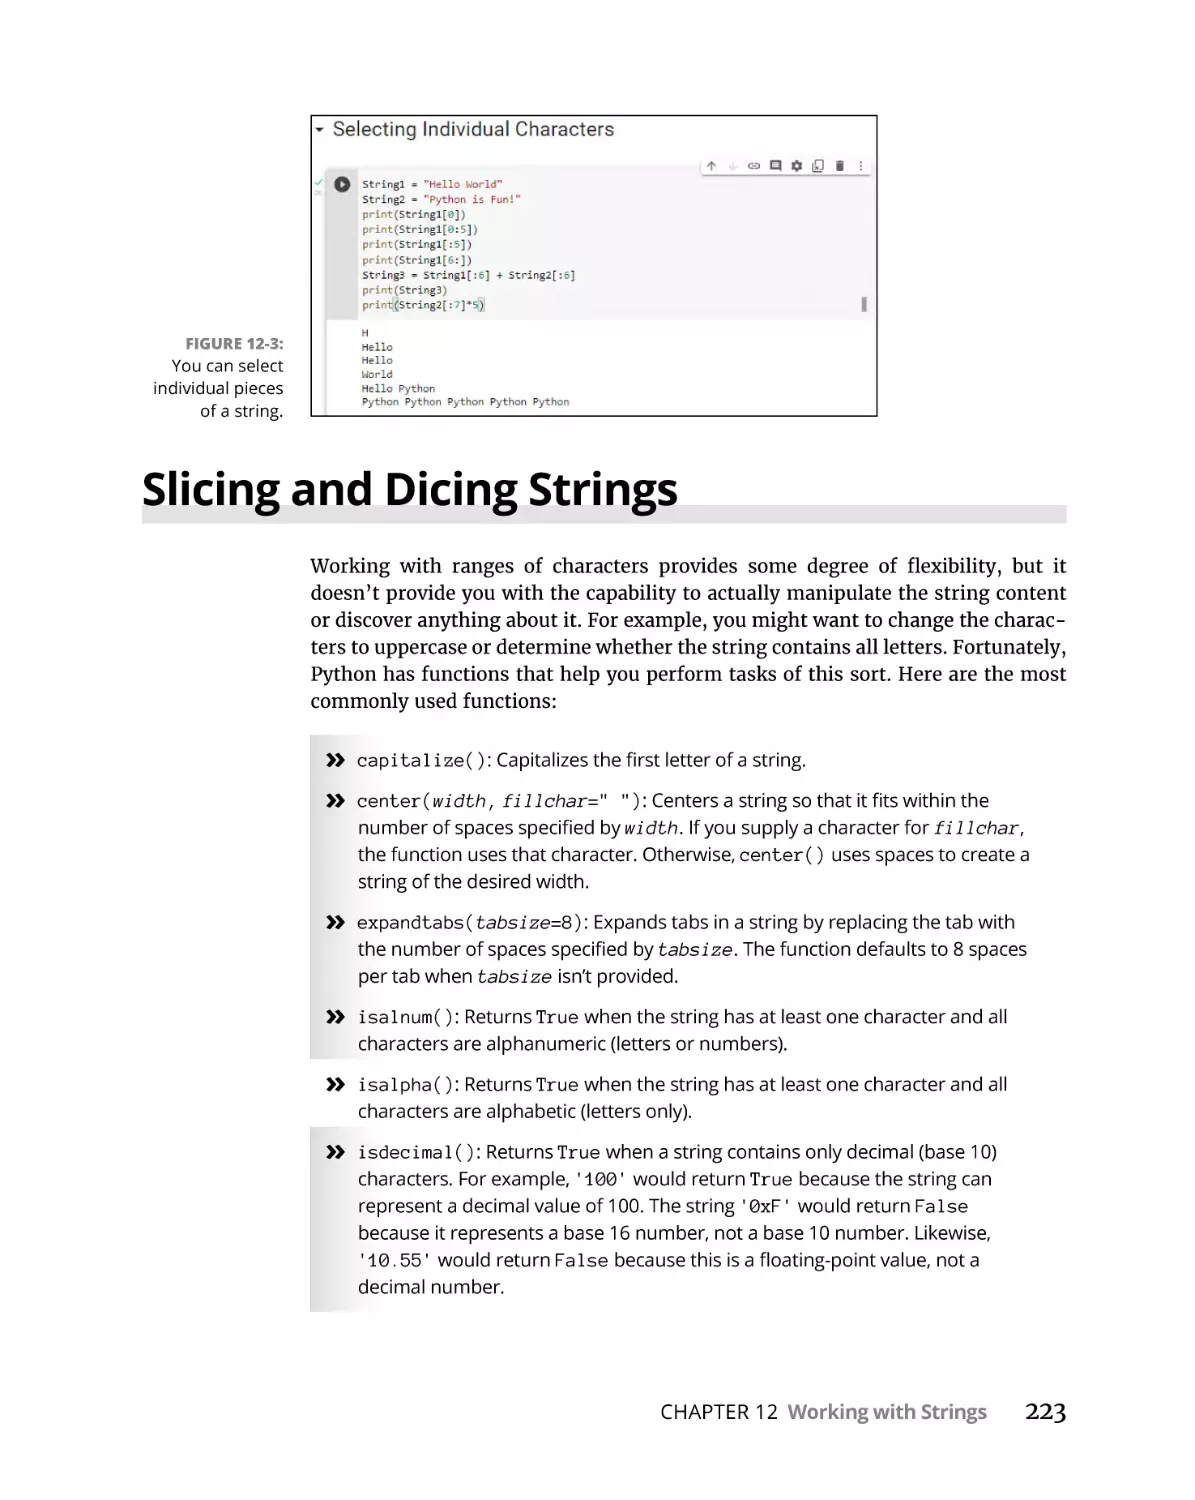 Slicing and Dicing Strings